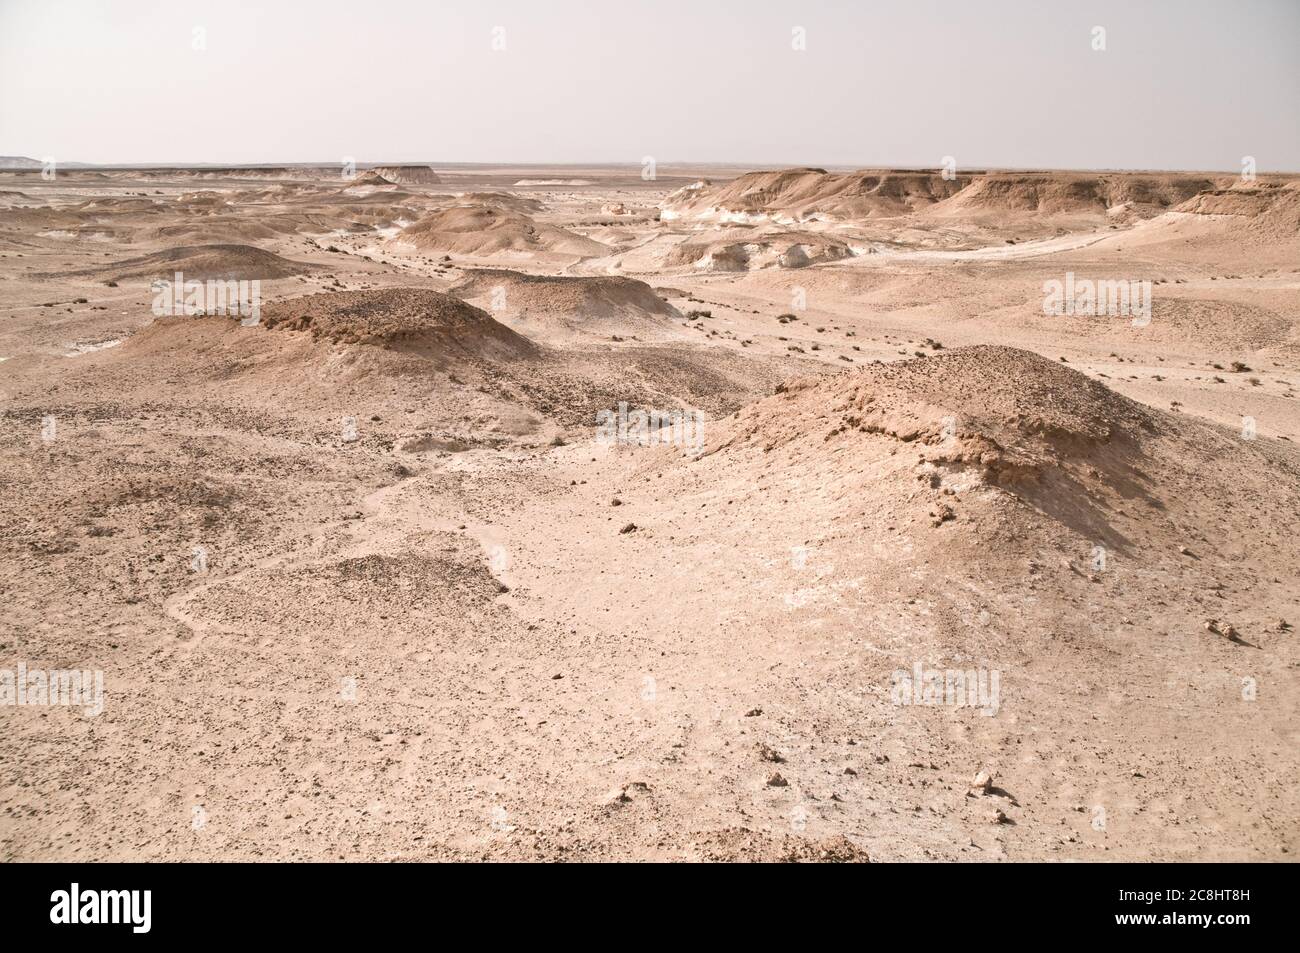 An arid, hilly and desolate plateau in the eastern desert of the Badia region, Wadi Dahek, Hashemite Kingdom of Jordan. Stock Photo